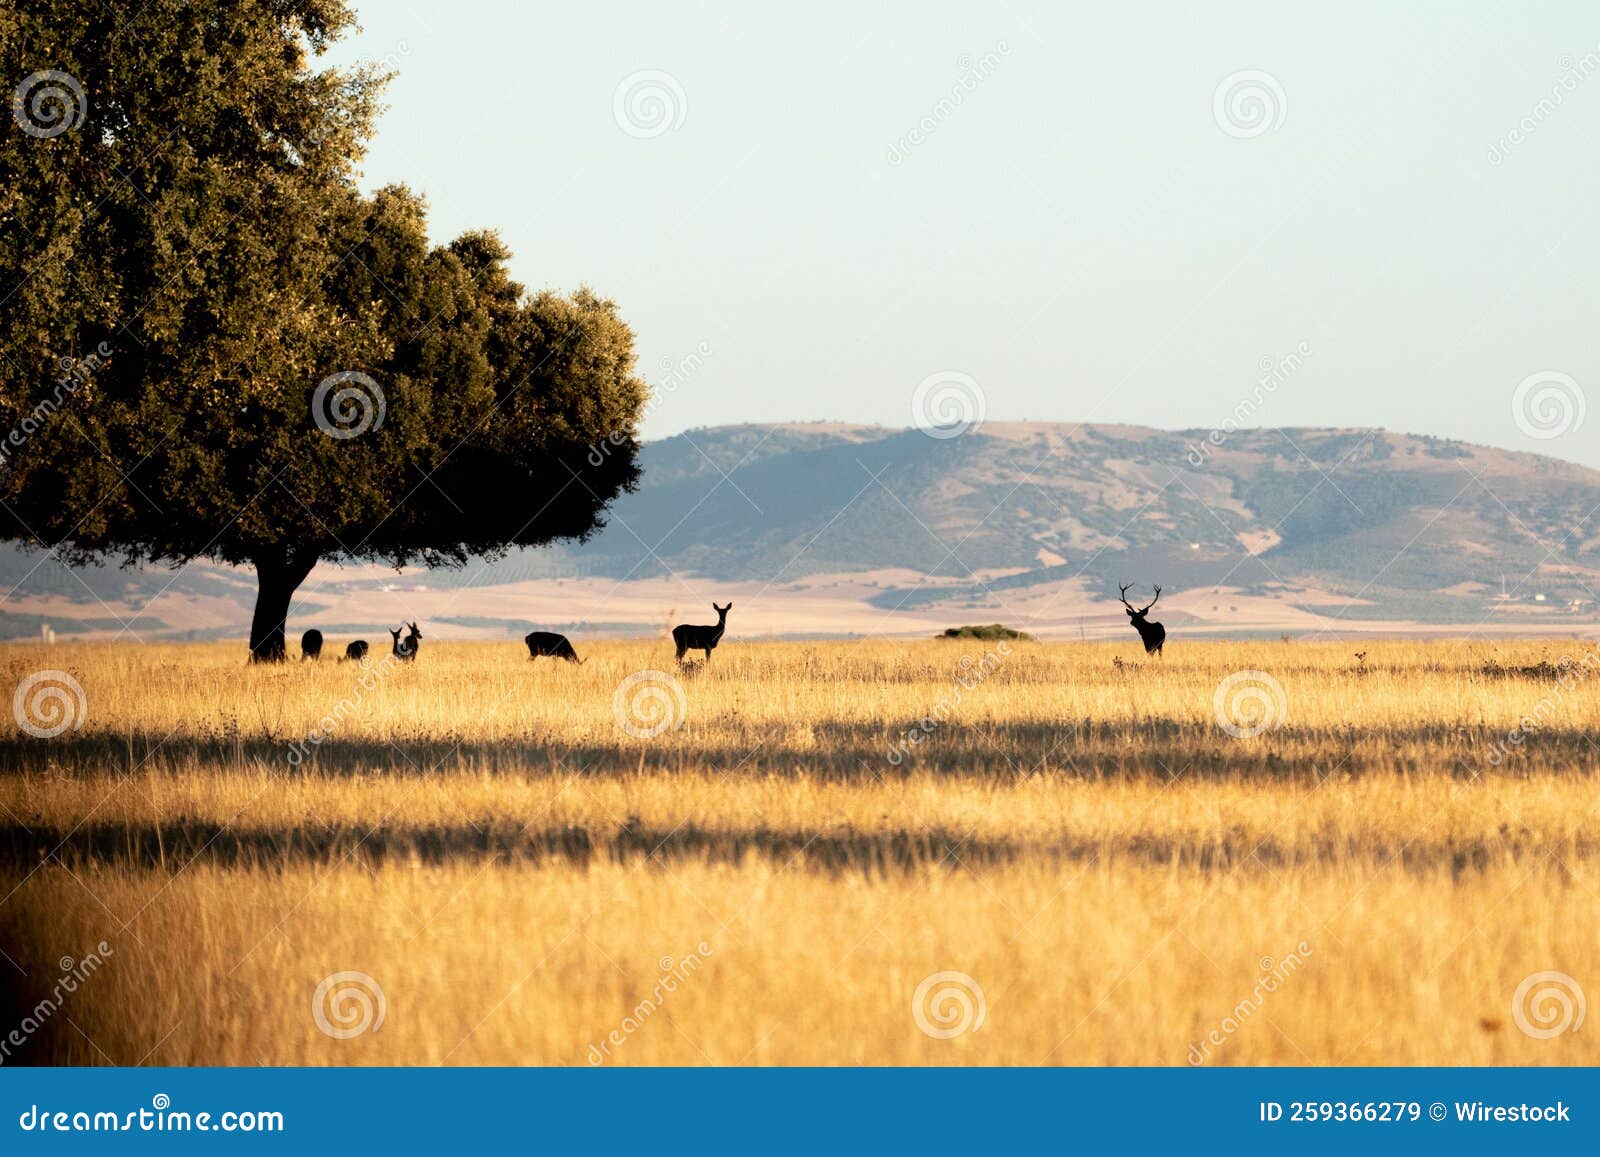 silhouette shot of a herd of deer on the field of cabaneros national park in montes de toledo, spain